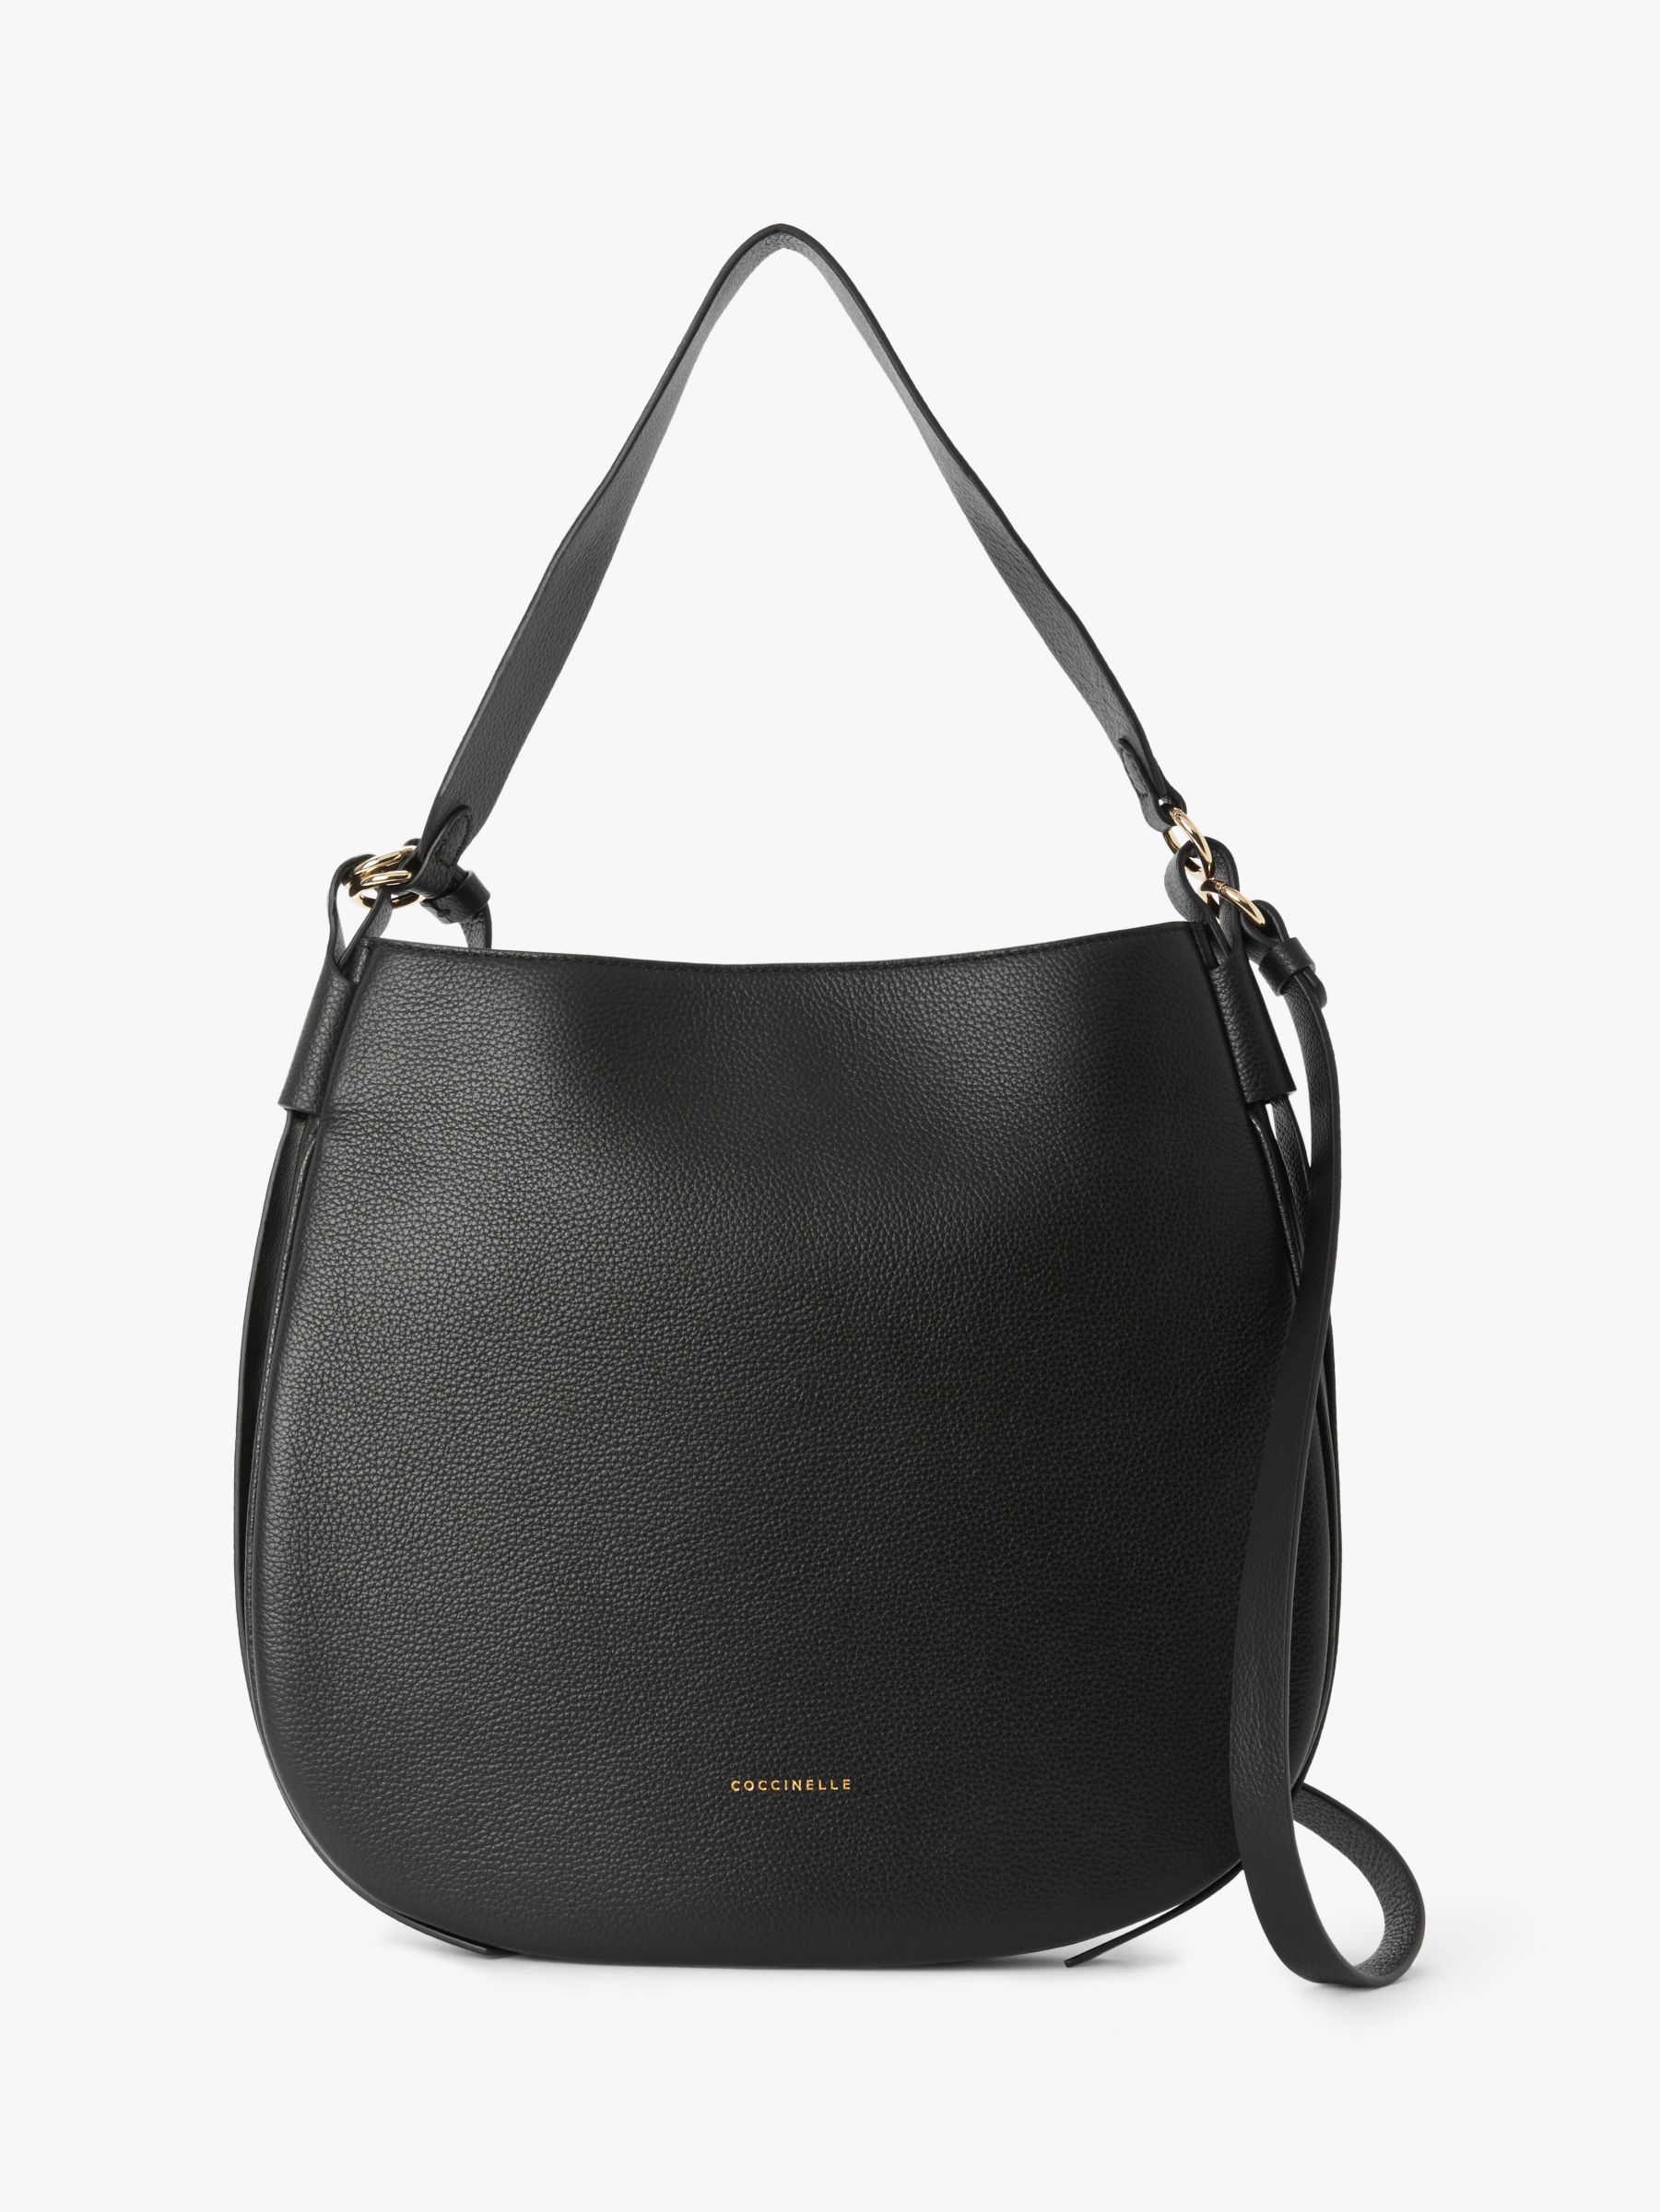 Coccinelle Maeva Leather Hobo Bag